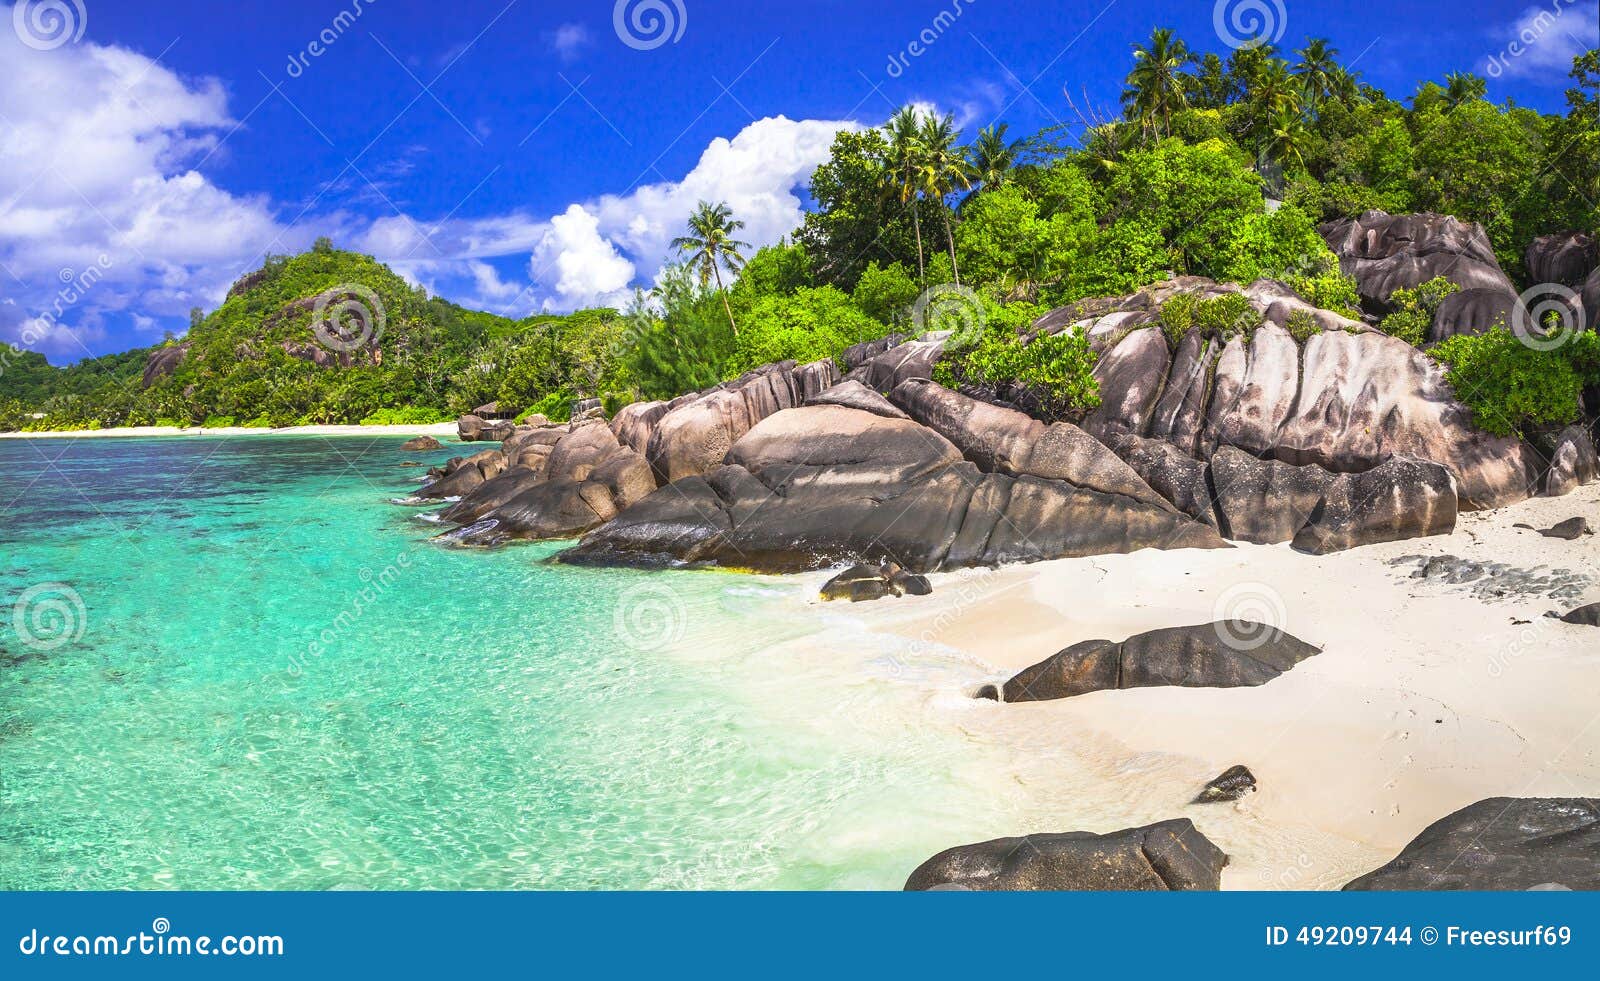 emerald beaches of seychelles